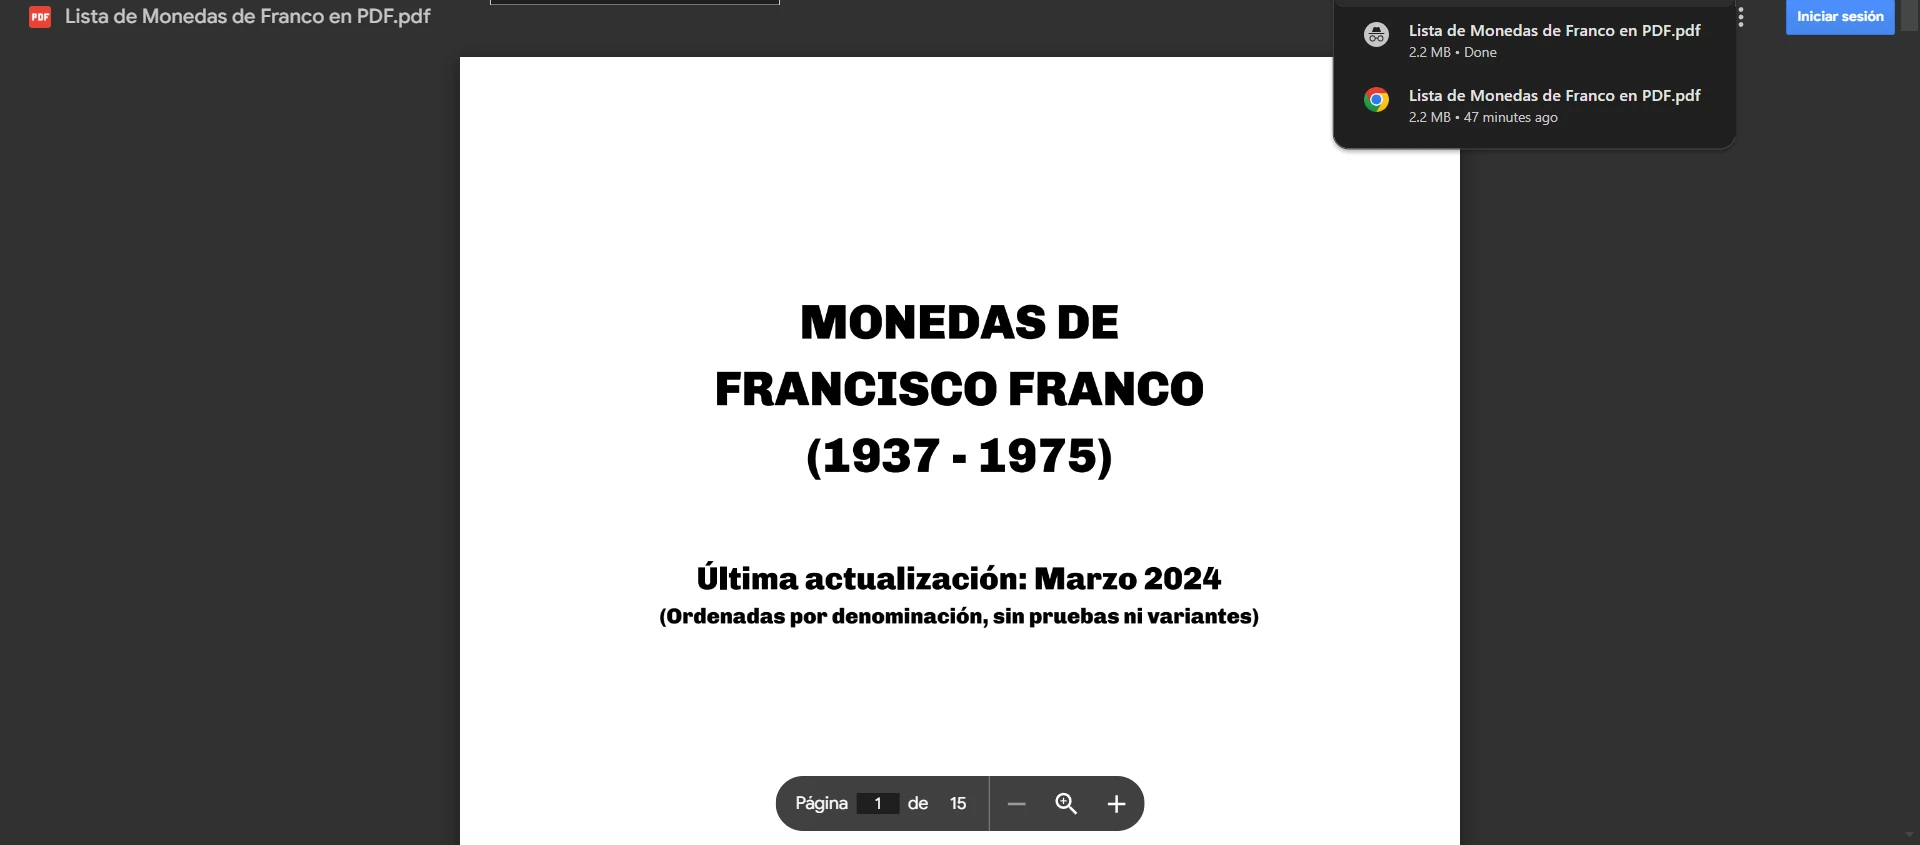 Lista en PDF de Monedas de Franco - Descargada